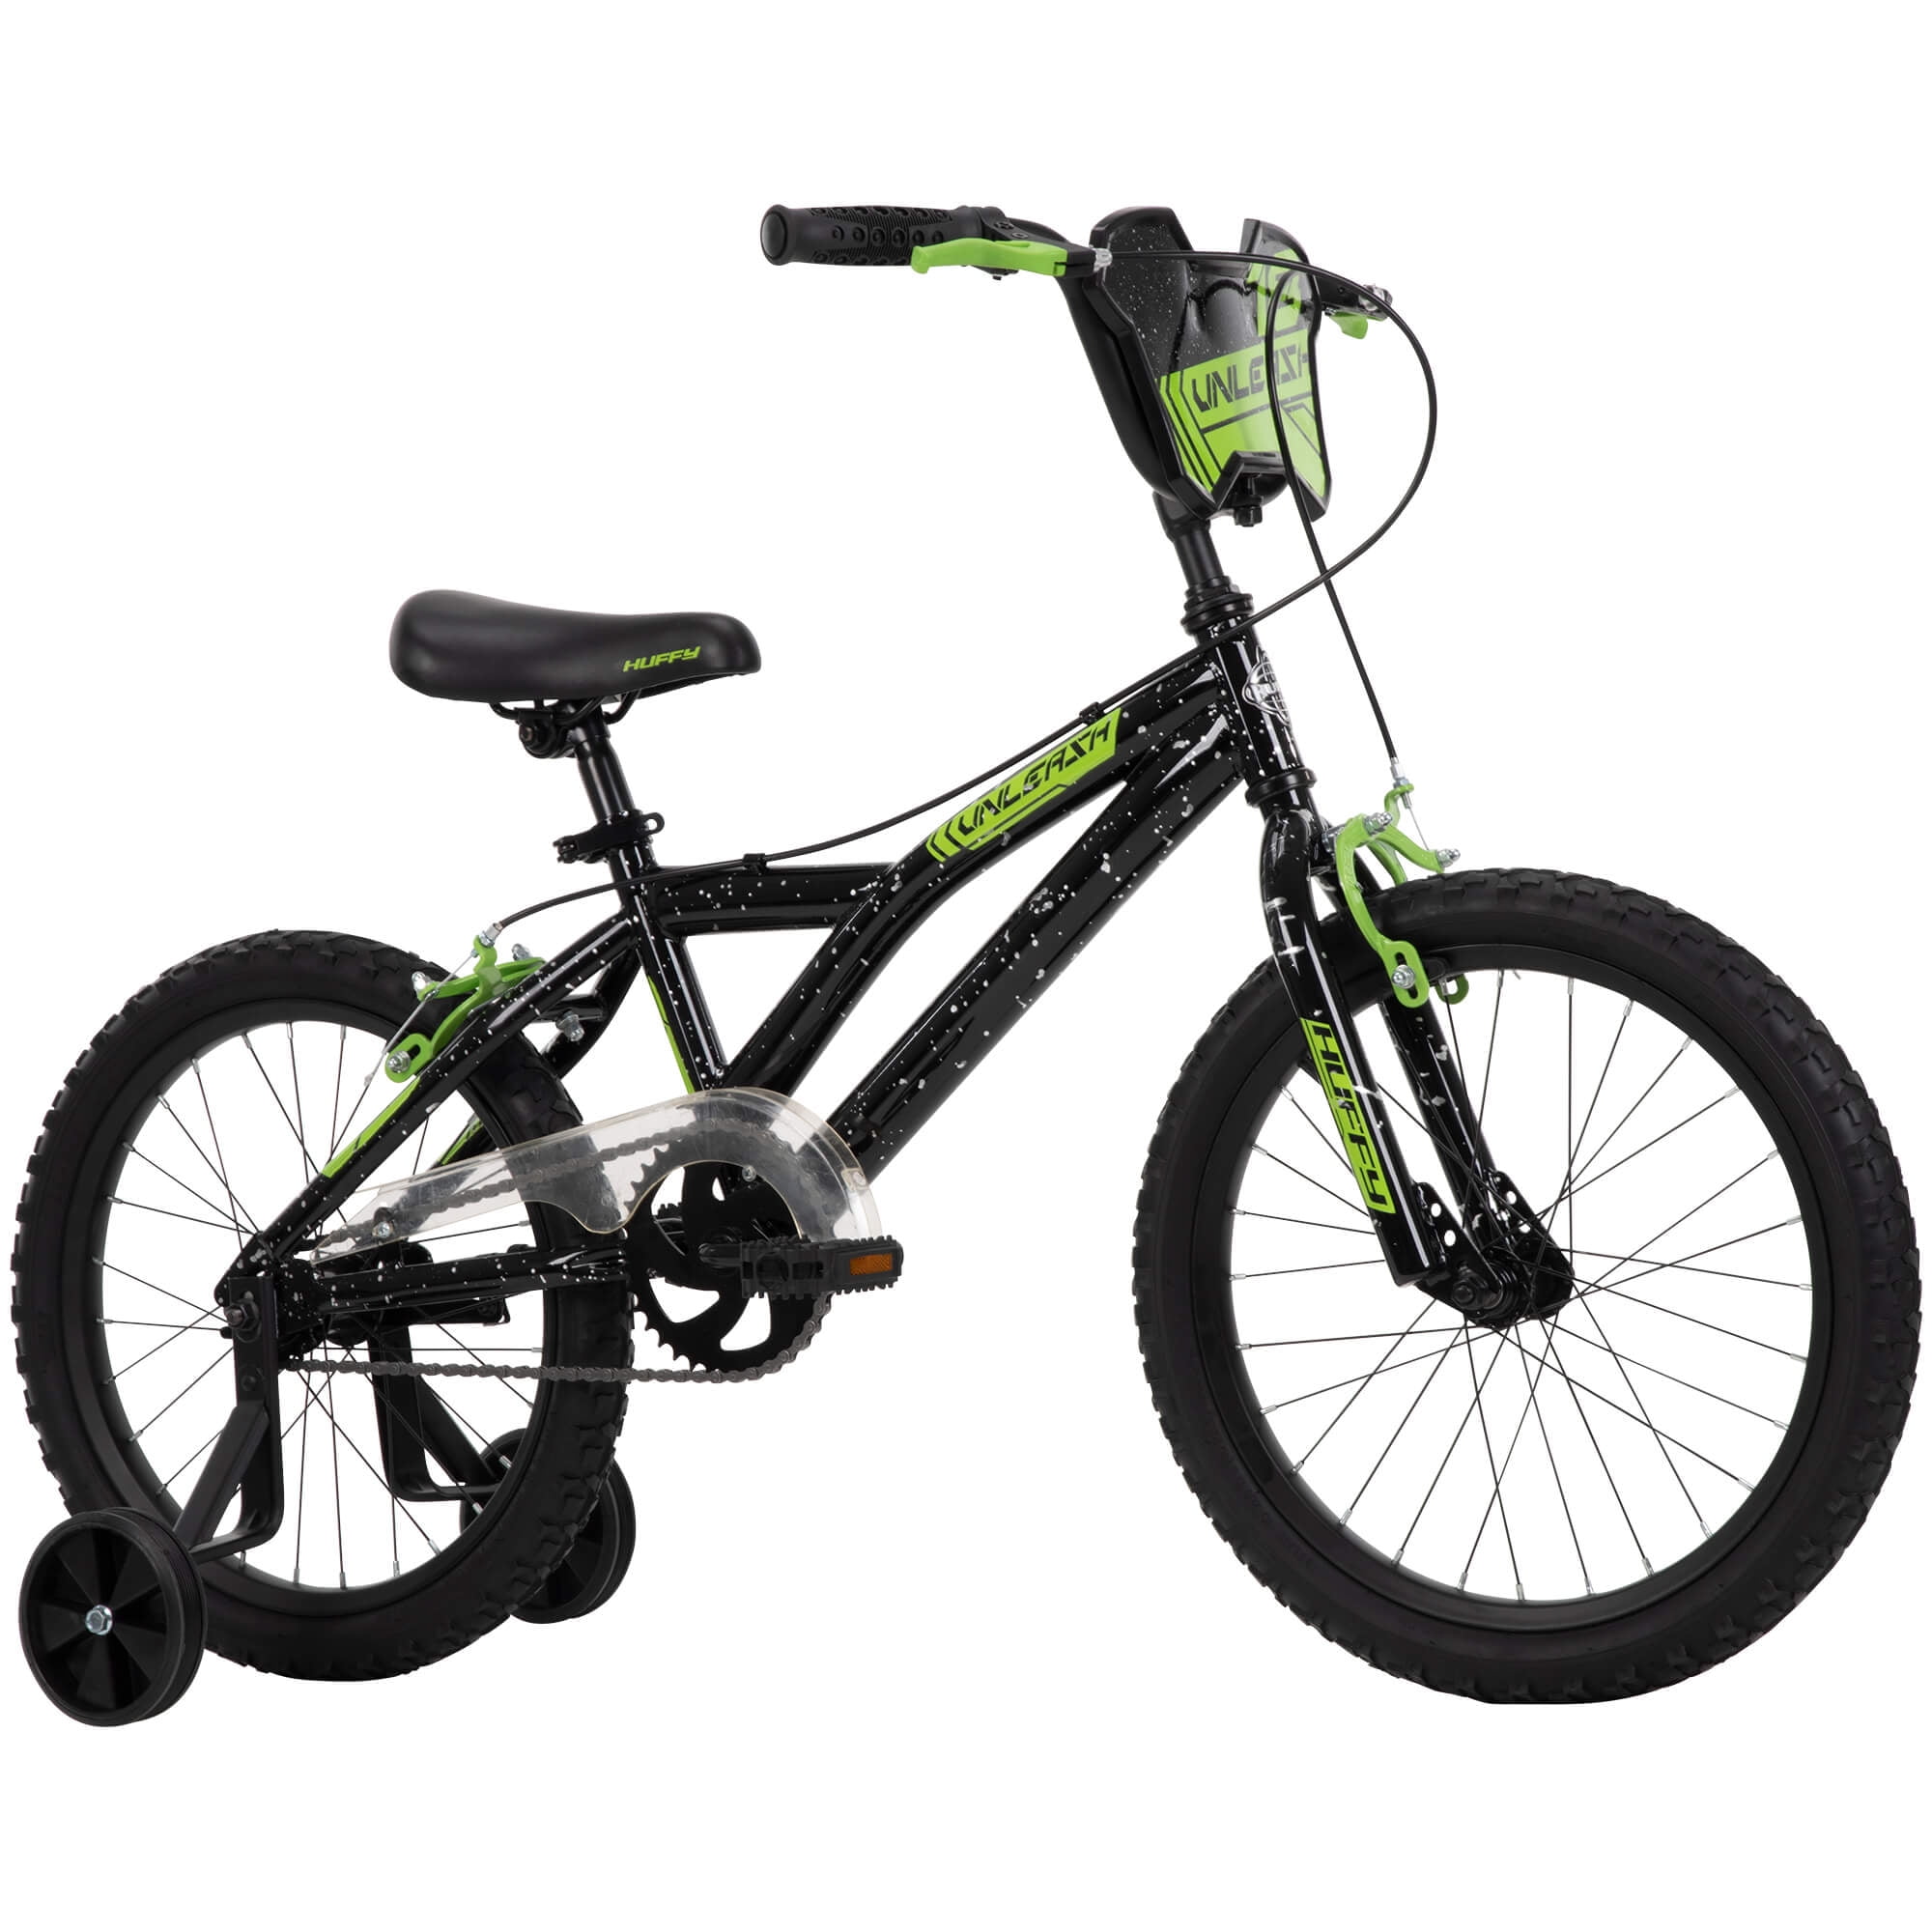 Boys 20” Bicycle Bike for kids Dino Dinosaur Army Green NEW 